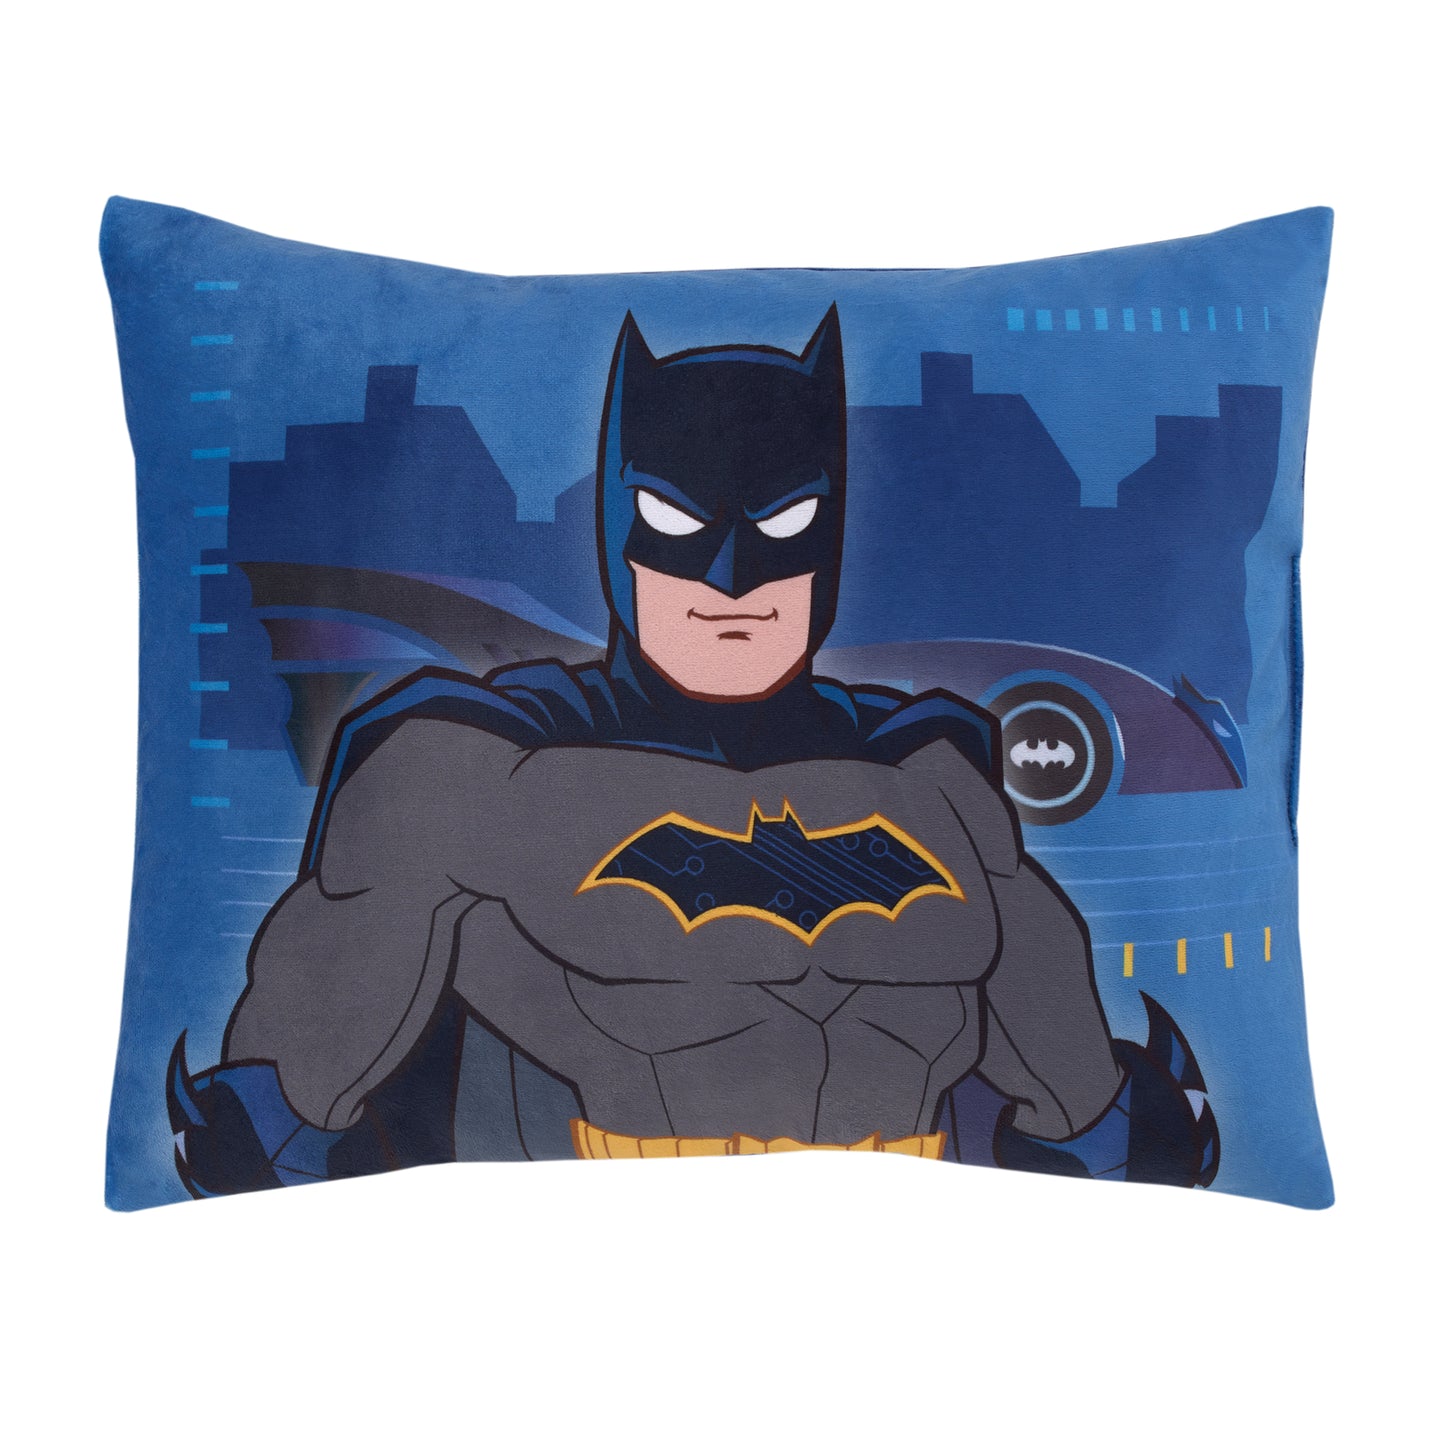 Warner Brothers Batman The Caped Crusader Navy, Gray and Yellow Decorative Toddler Pillow